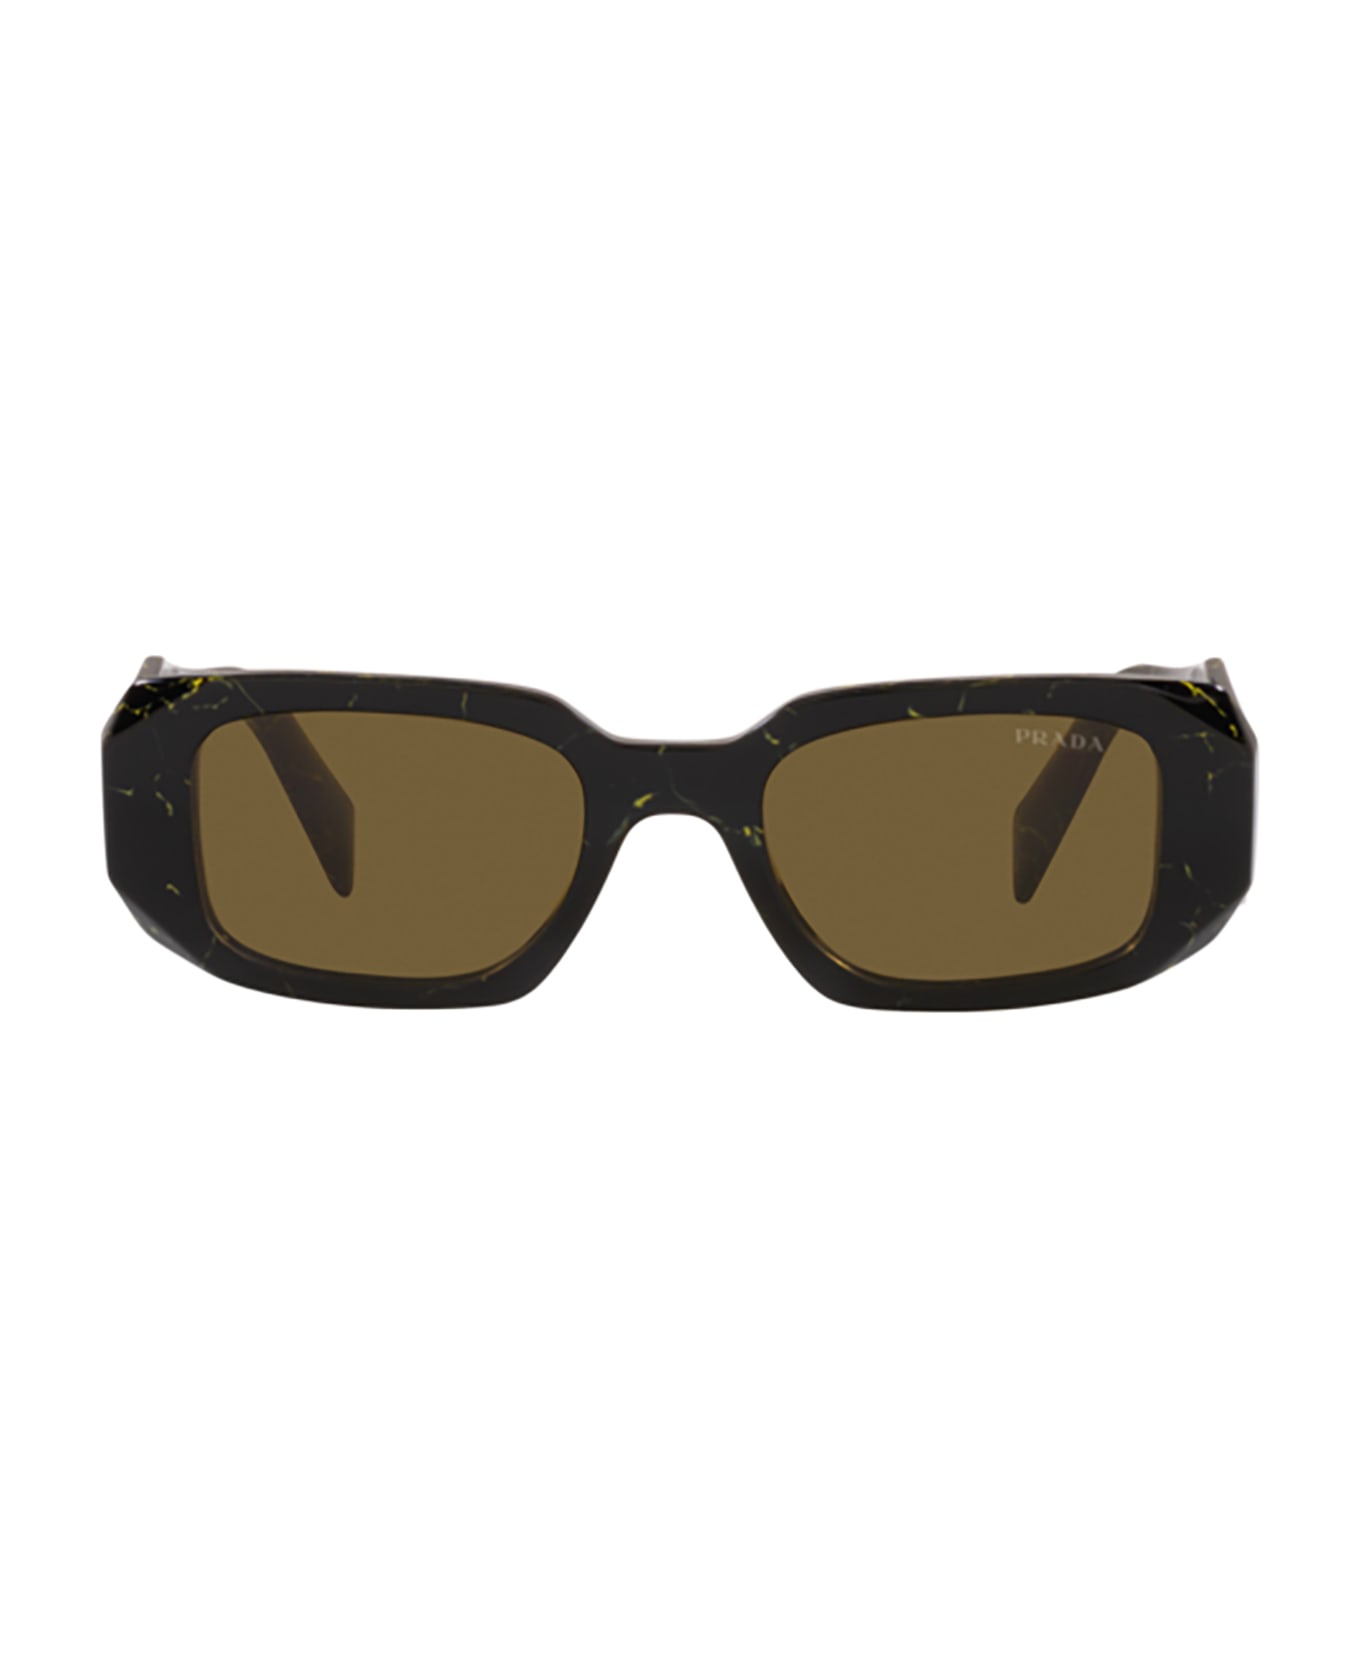 Prada Eyewear 17WS SOLE Sunglasses - T サングラス